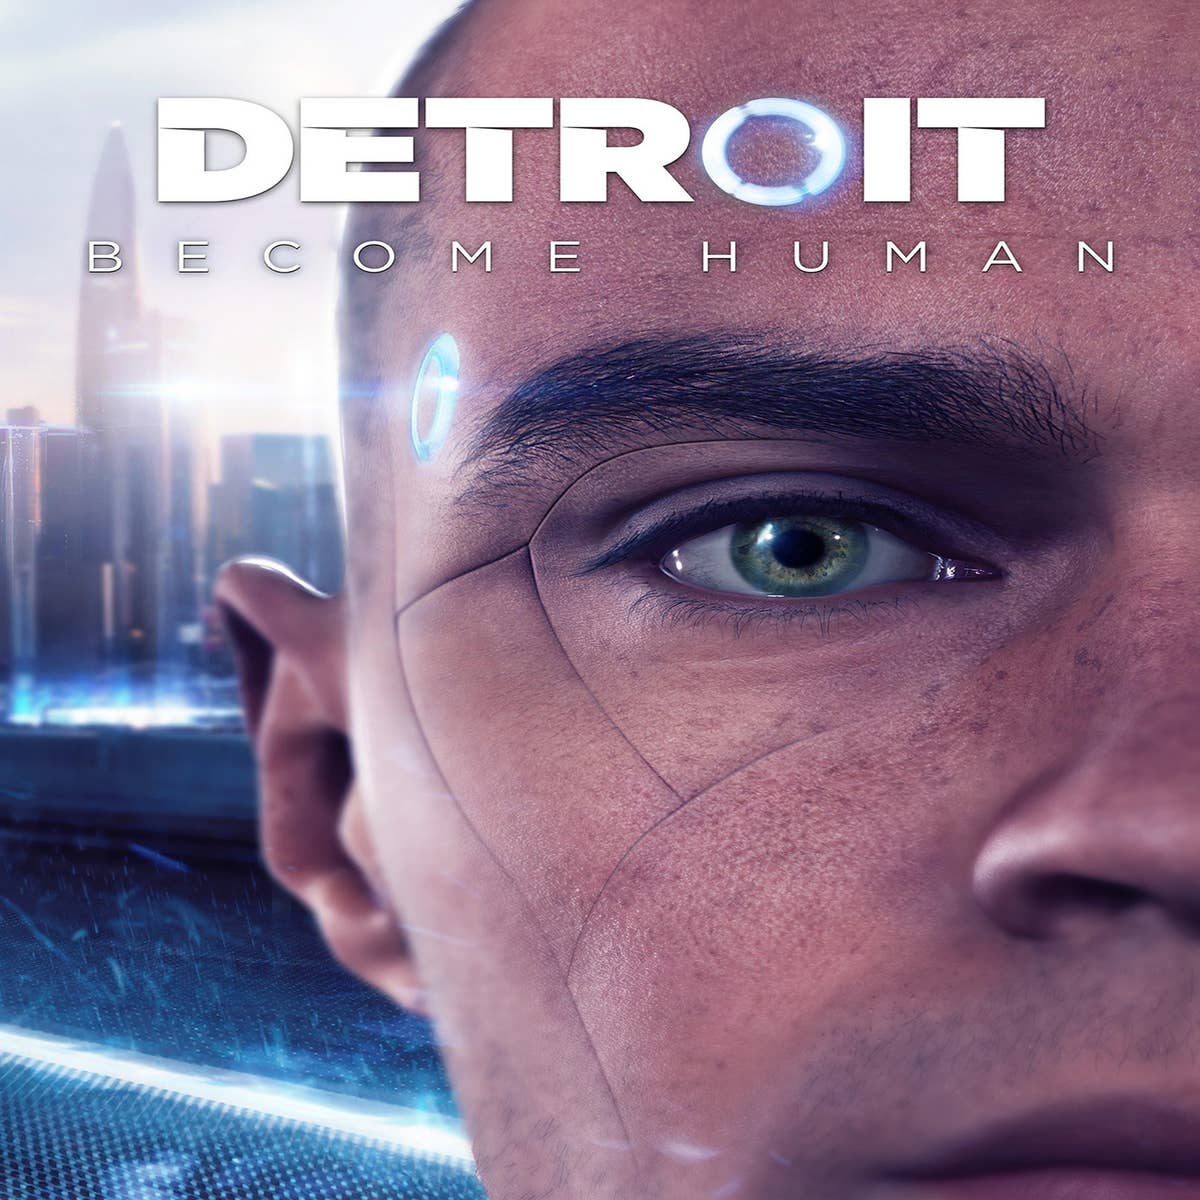 Detroit: Become Human - confira os requisitos mínimos e recomendados